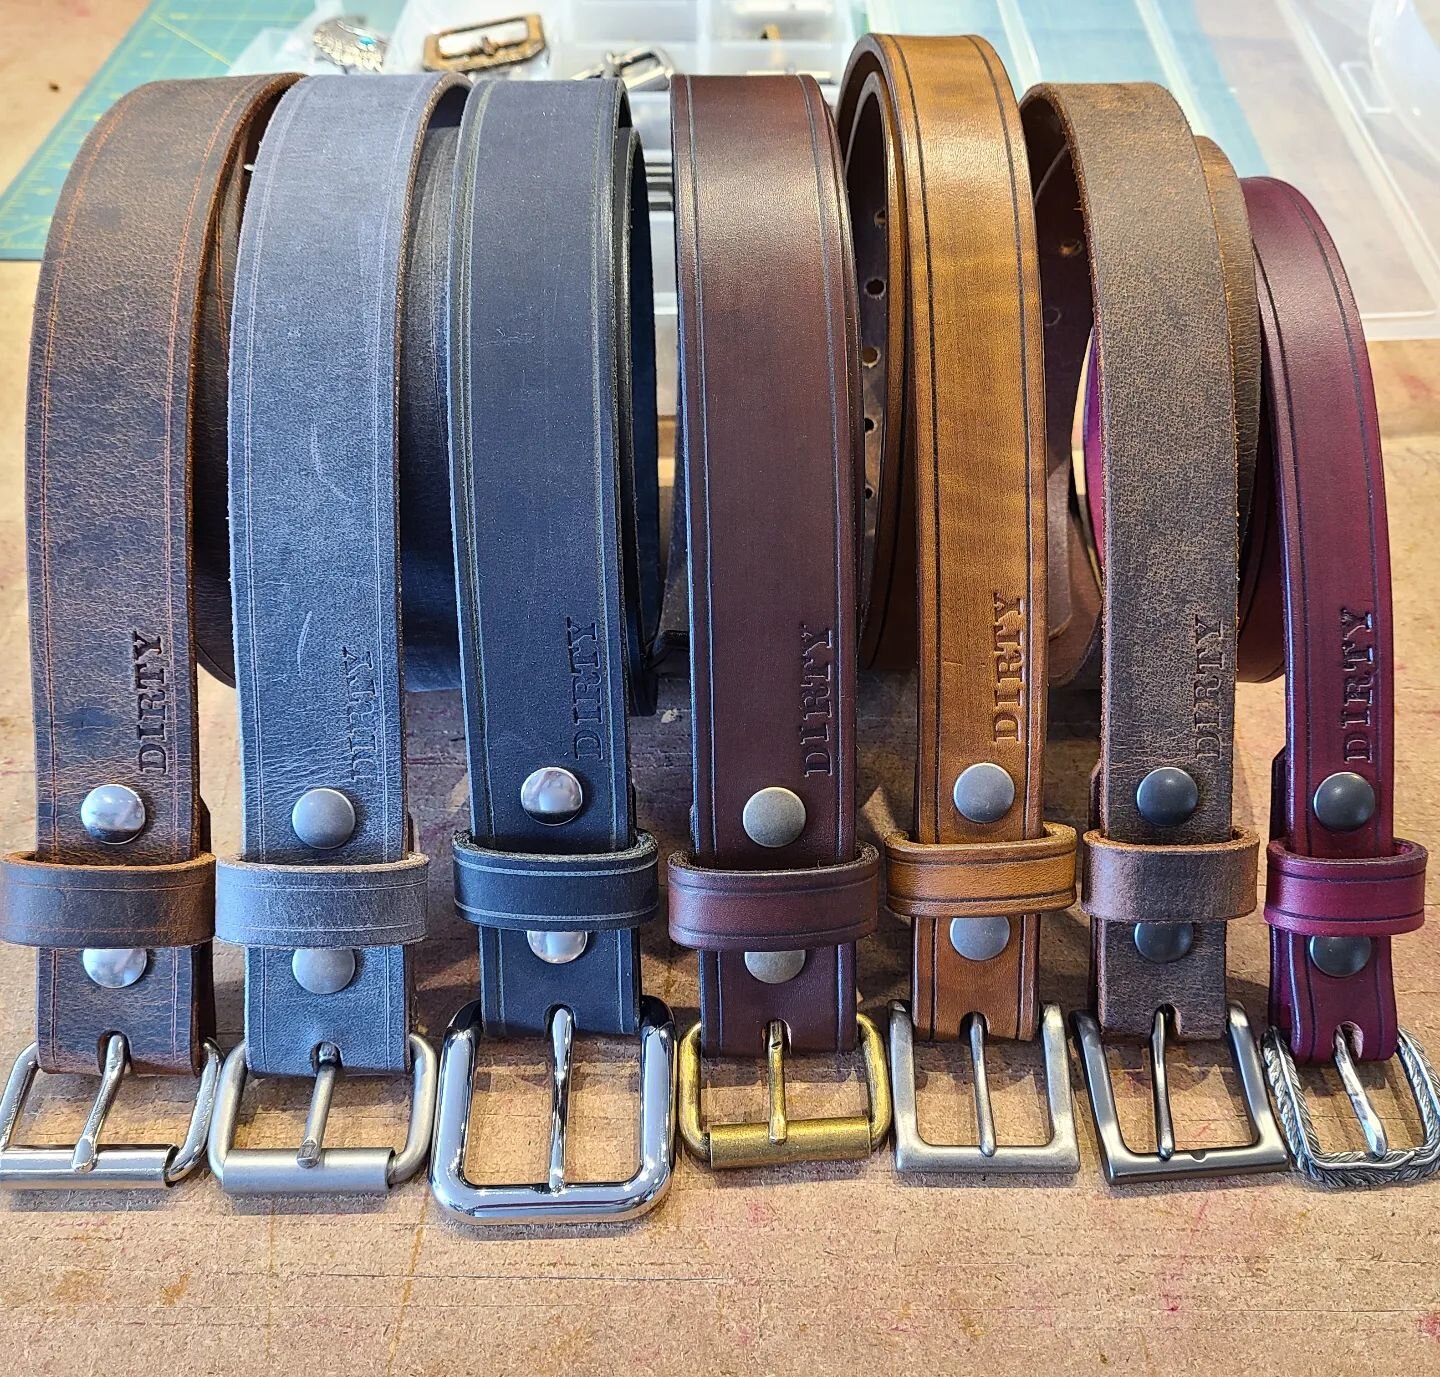 Just belts...

#dirtyleather 
#handmadeleathergoods
#handmade
#handcrafted
#handcraftedleather
#madeincanada
#supportyourlocalleatherworker 
#leatherworker 
#leatherartisan 
#leather
#shopsmall 
#shoplocal 
#georgianbayartisan 
#shopdirty
#handmadele